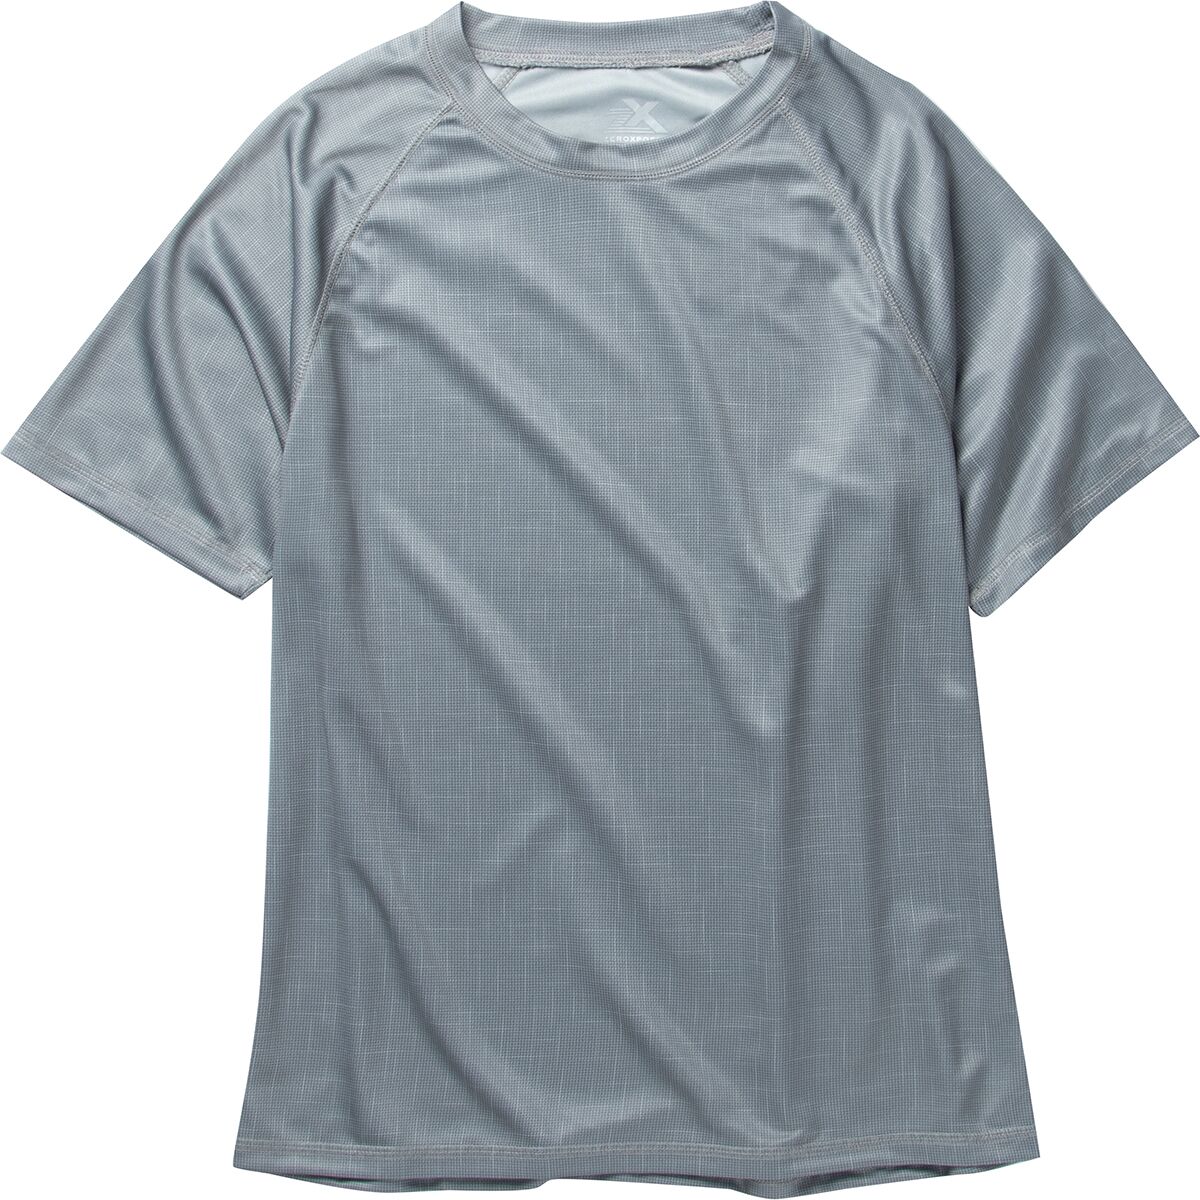 ZeroXposur Island Printed Sun Protection T-Shirt - Men's - Men